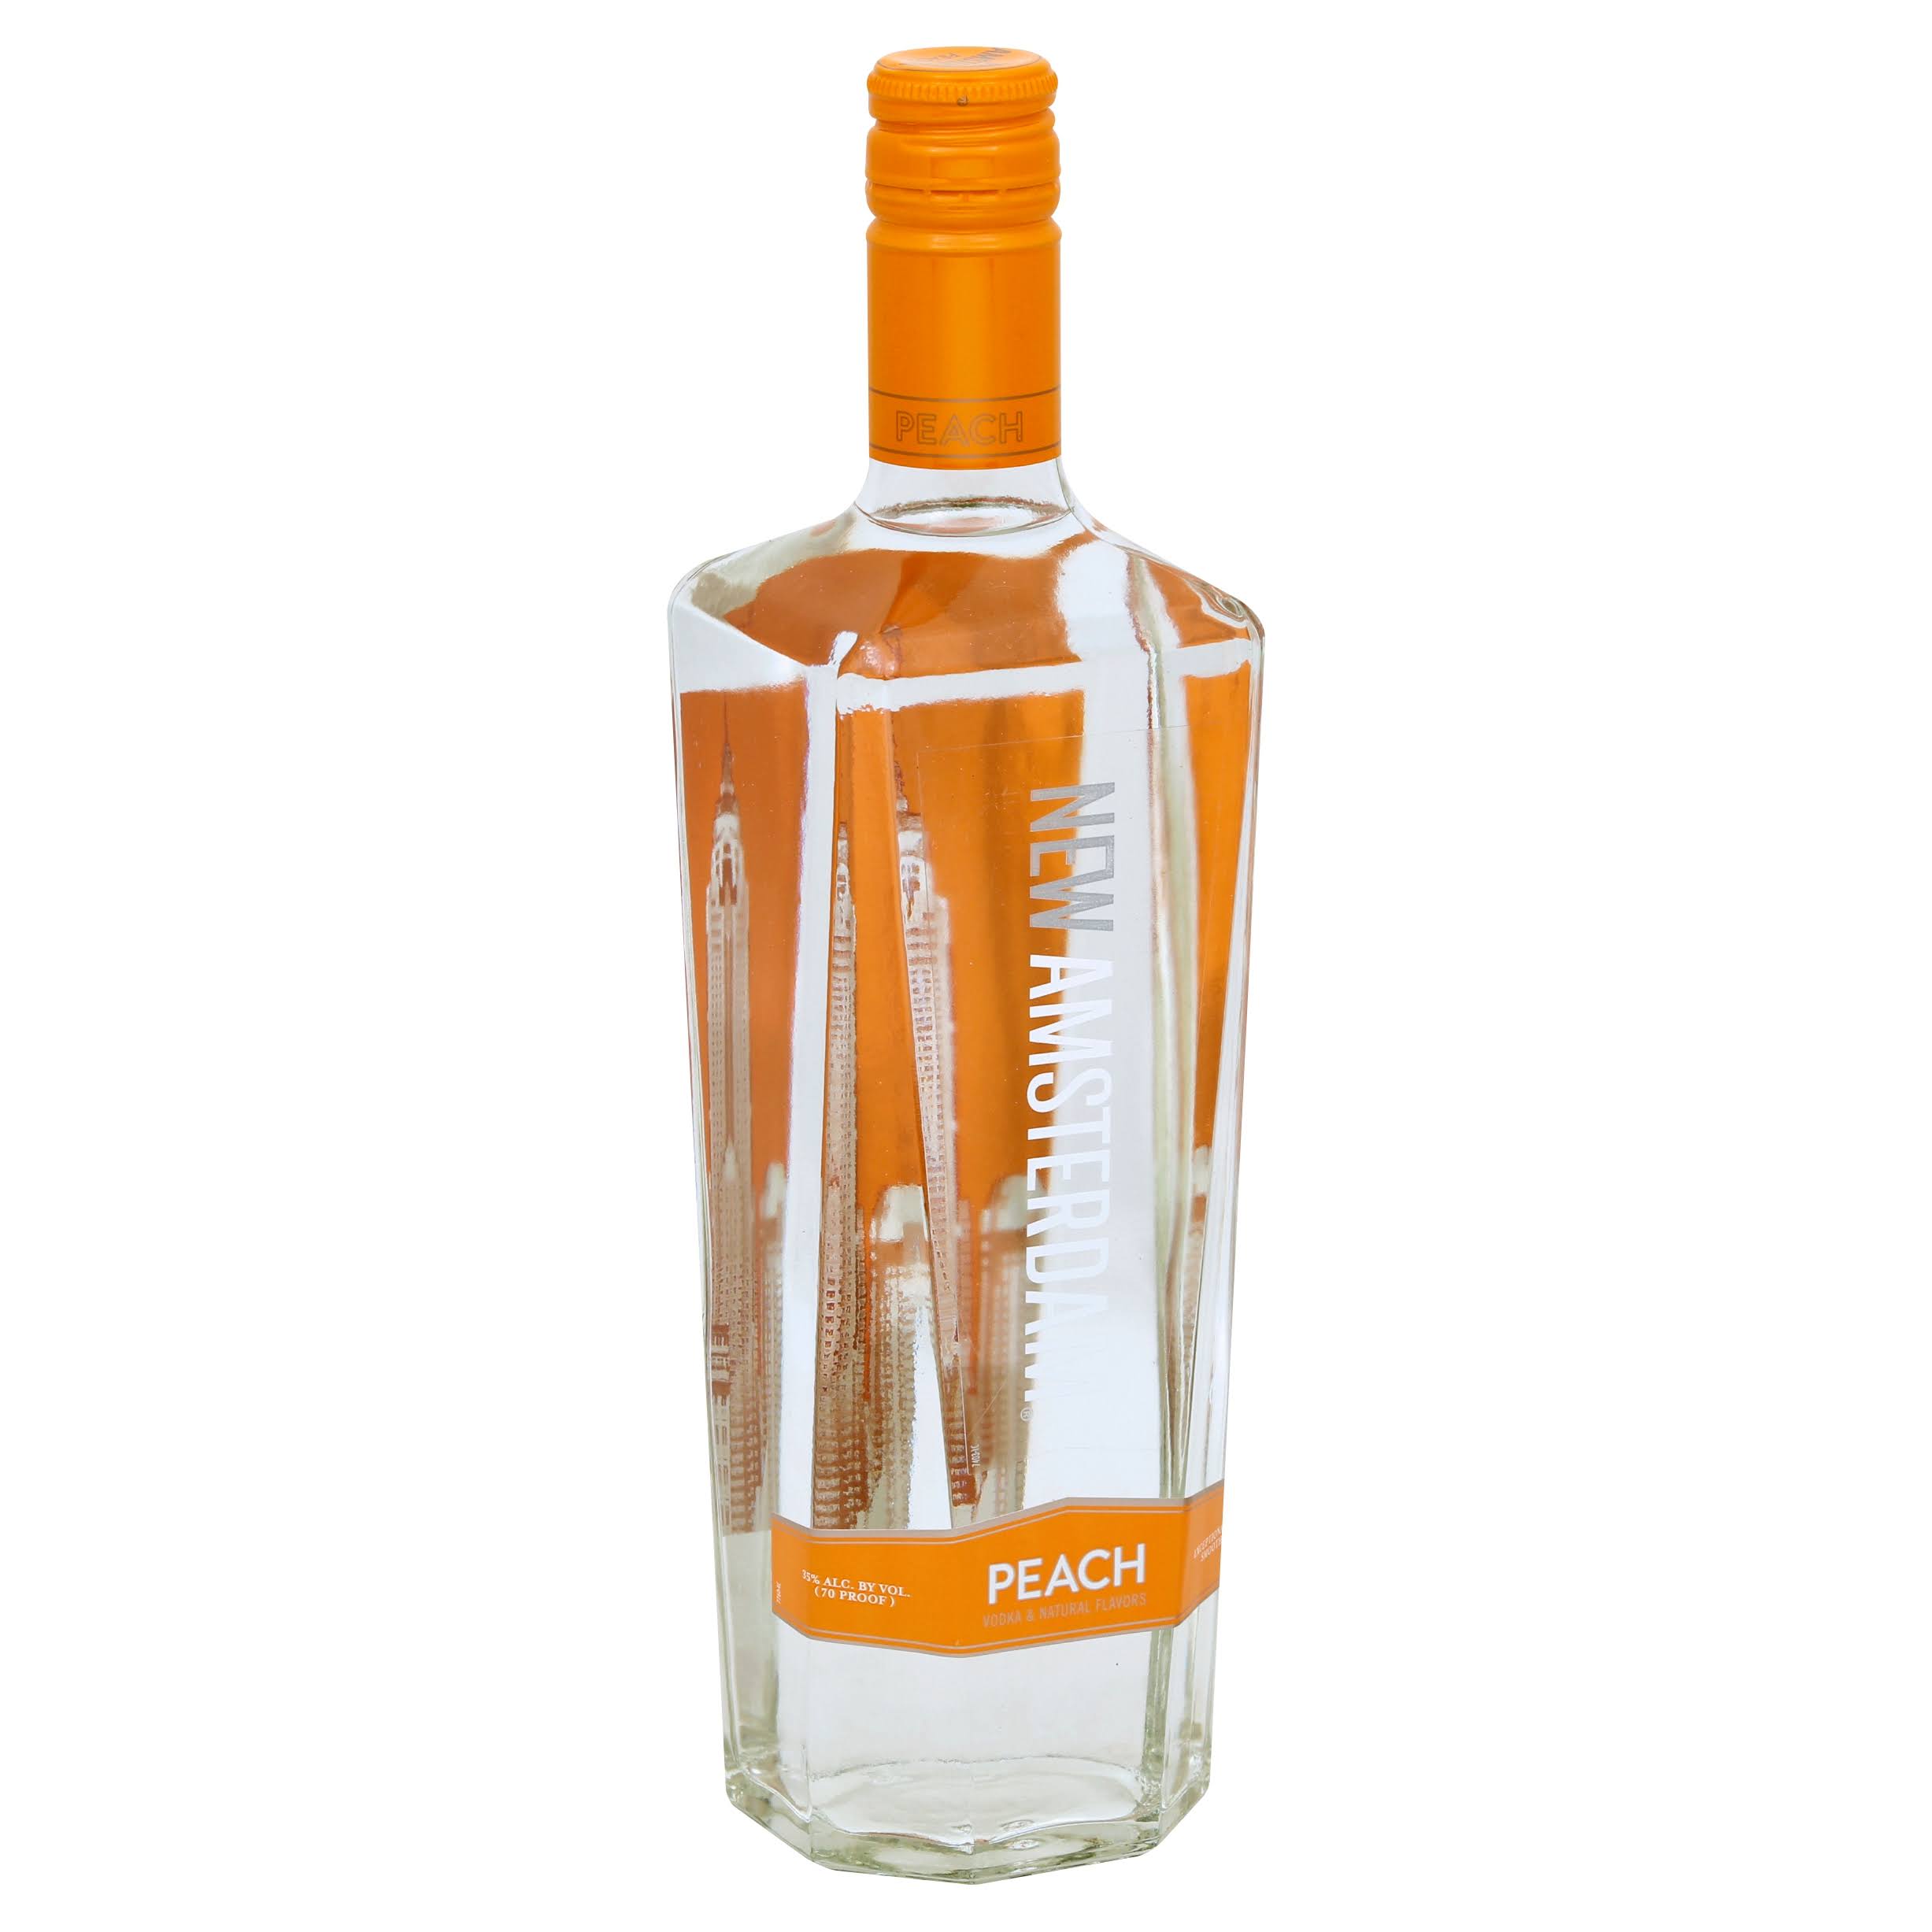 New Amsterdam Vodka, Peach - 750 ml